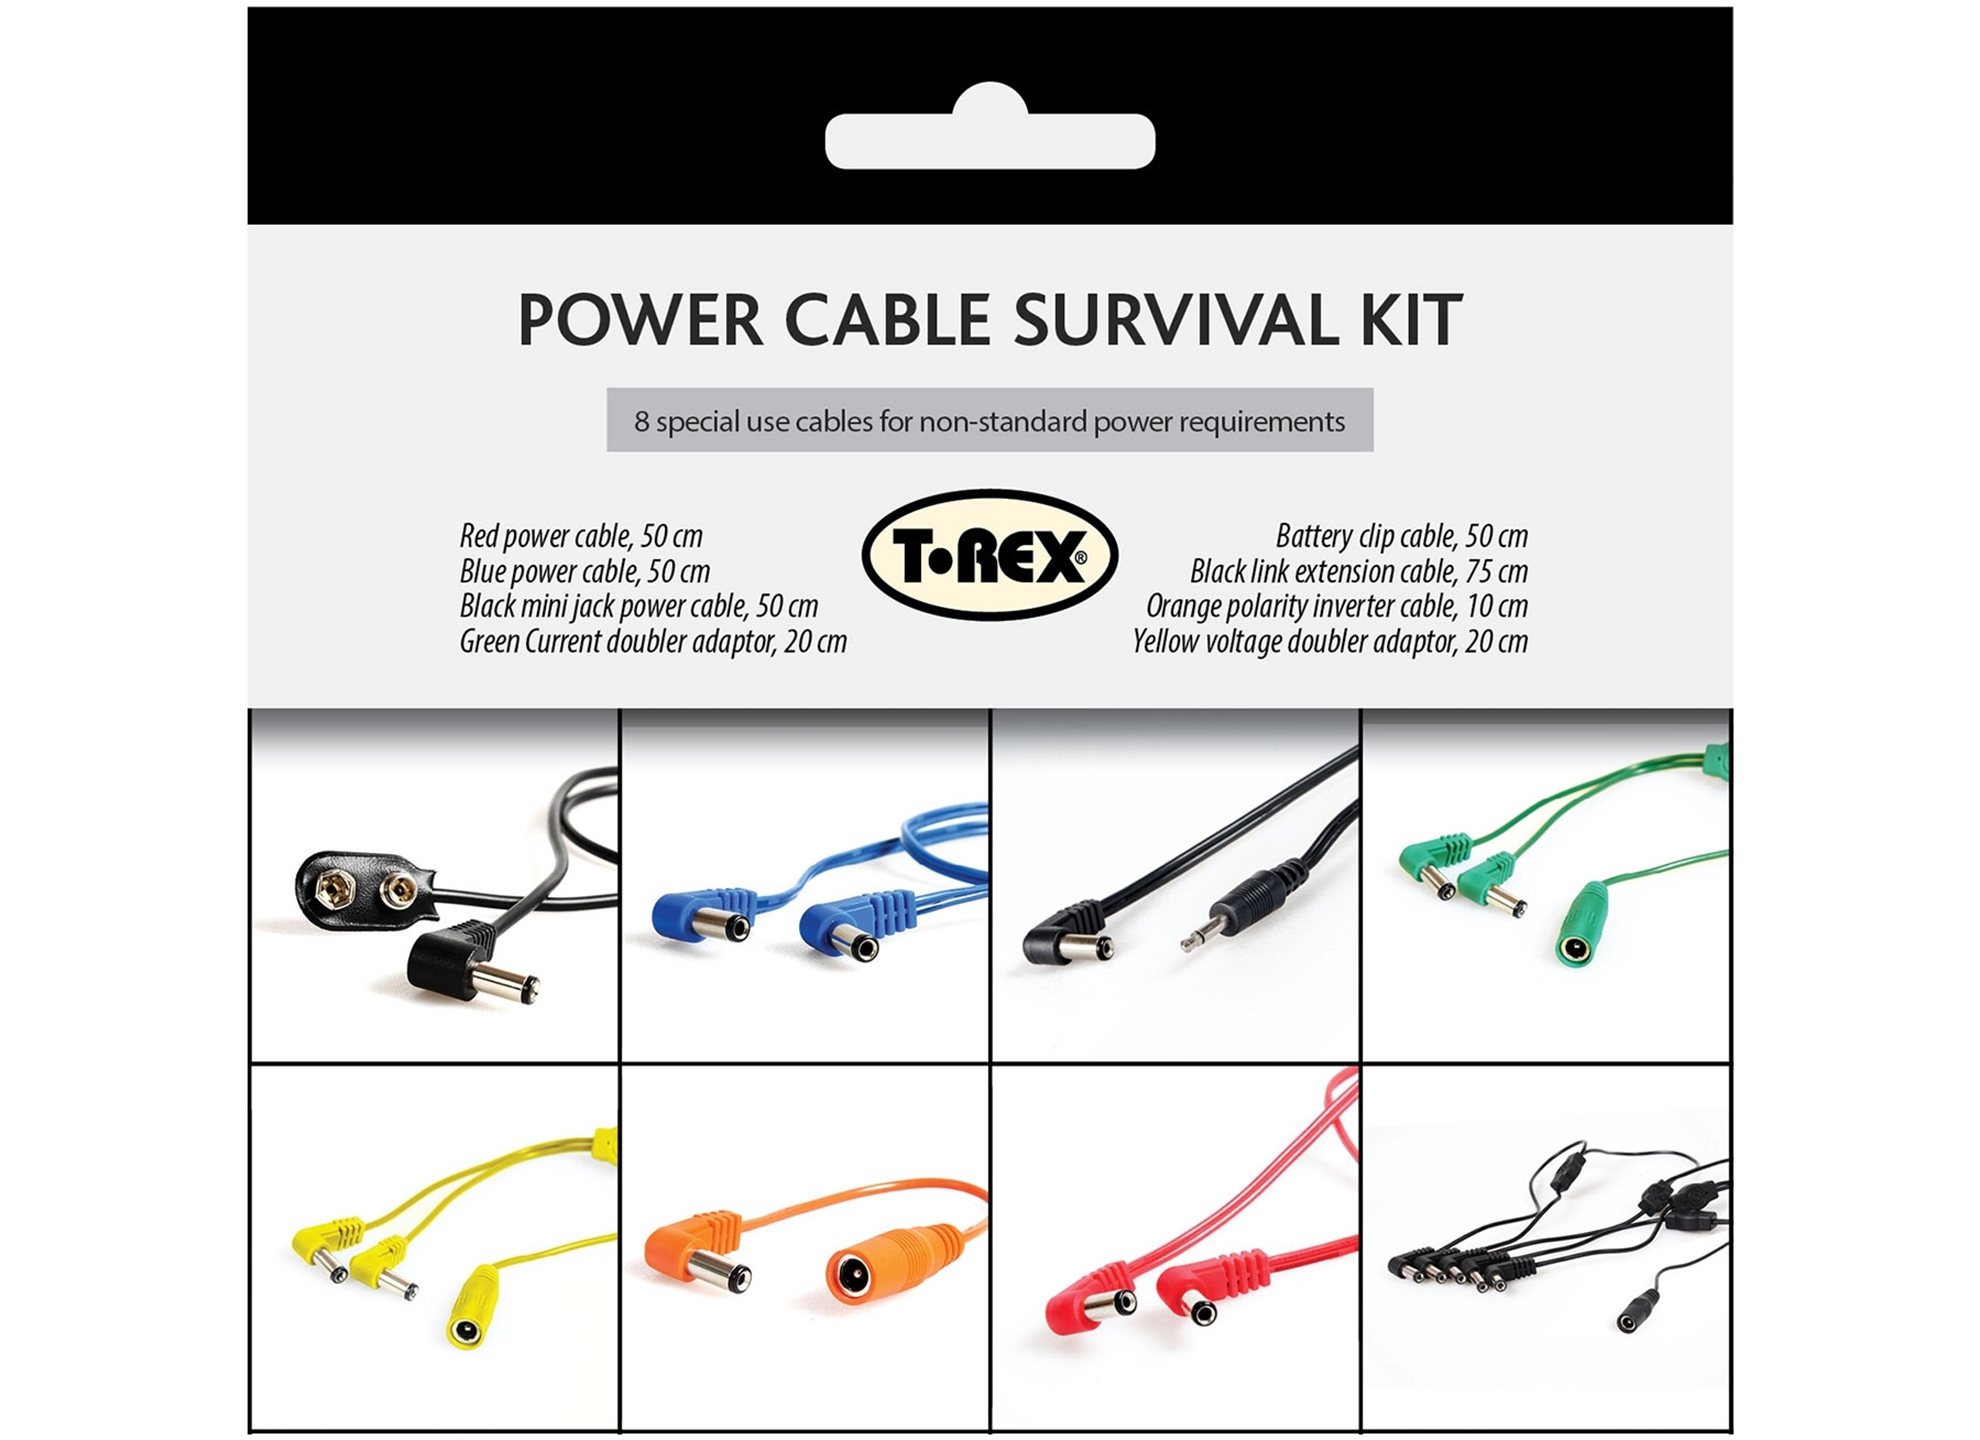 Power cable survival kit